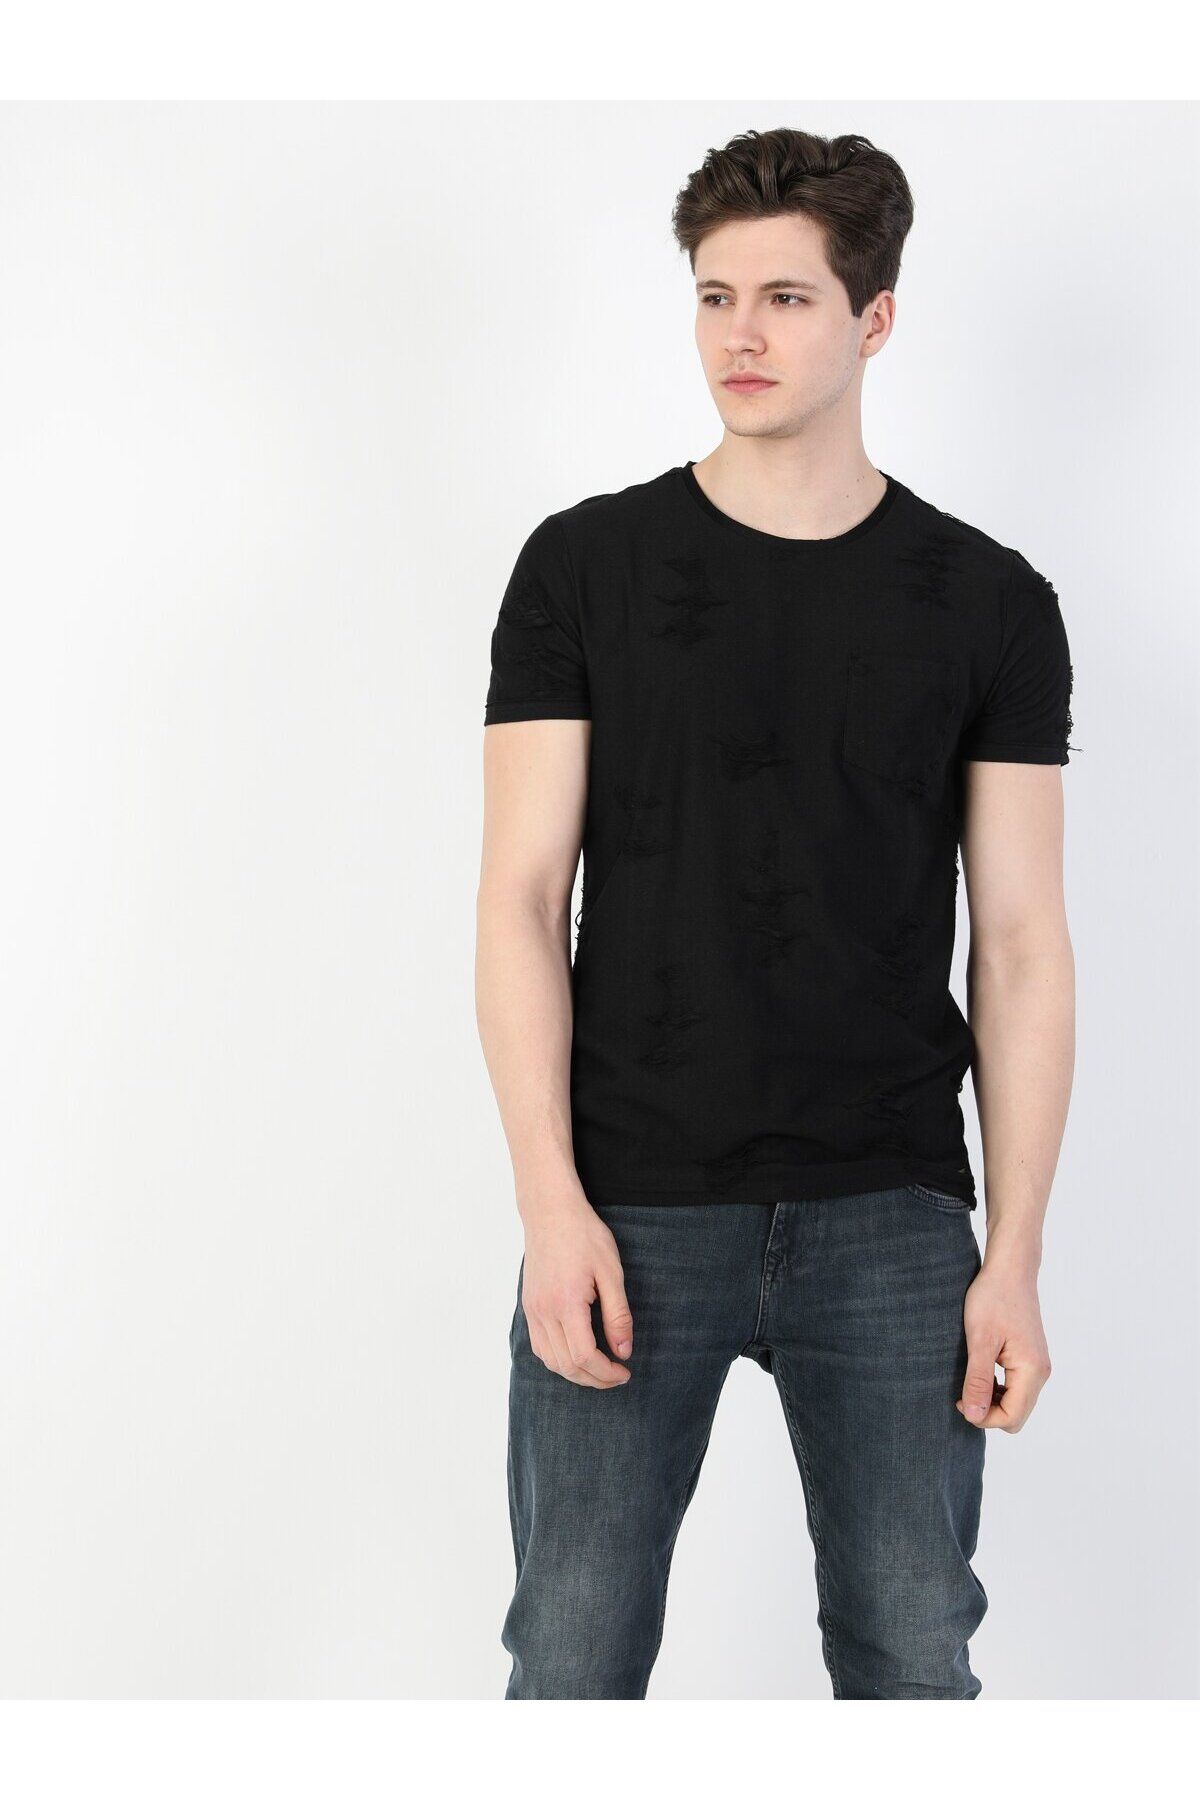 Colin’s تی شرت آستین کوتاه مشکی مردانه یقه بافتنی معمولی